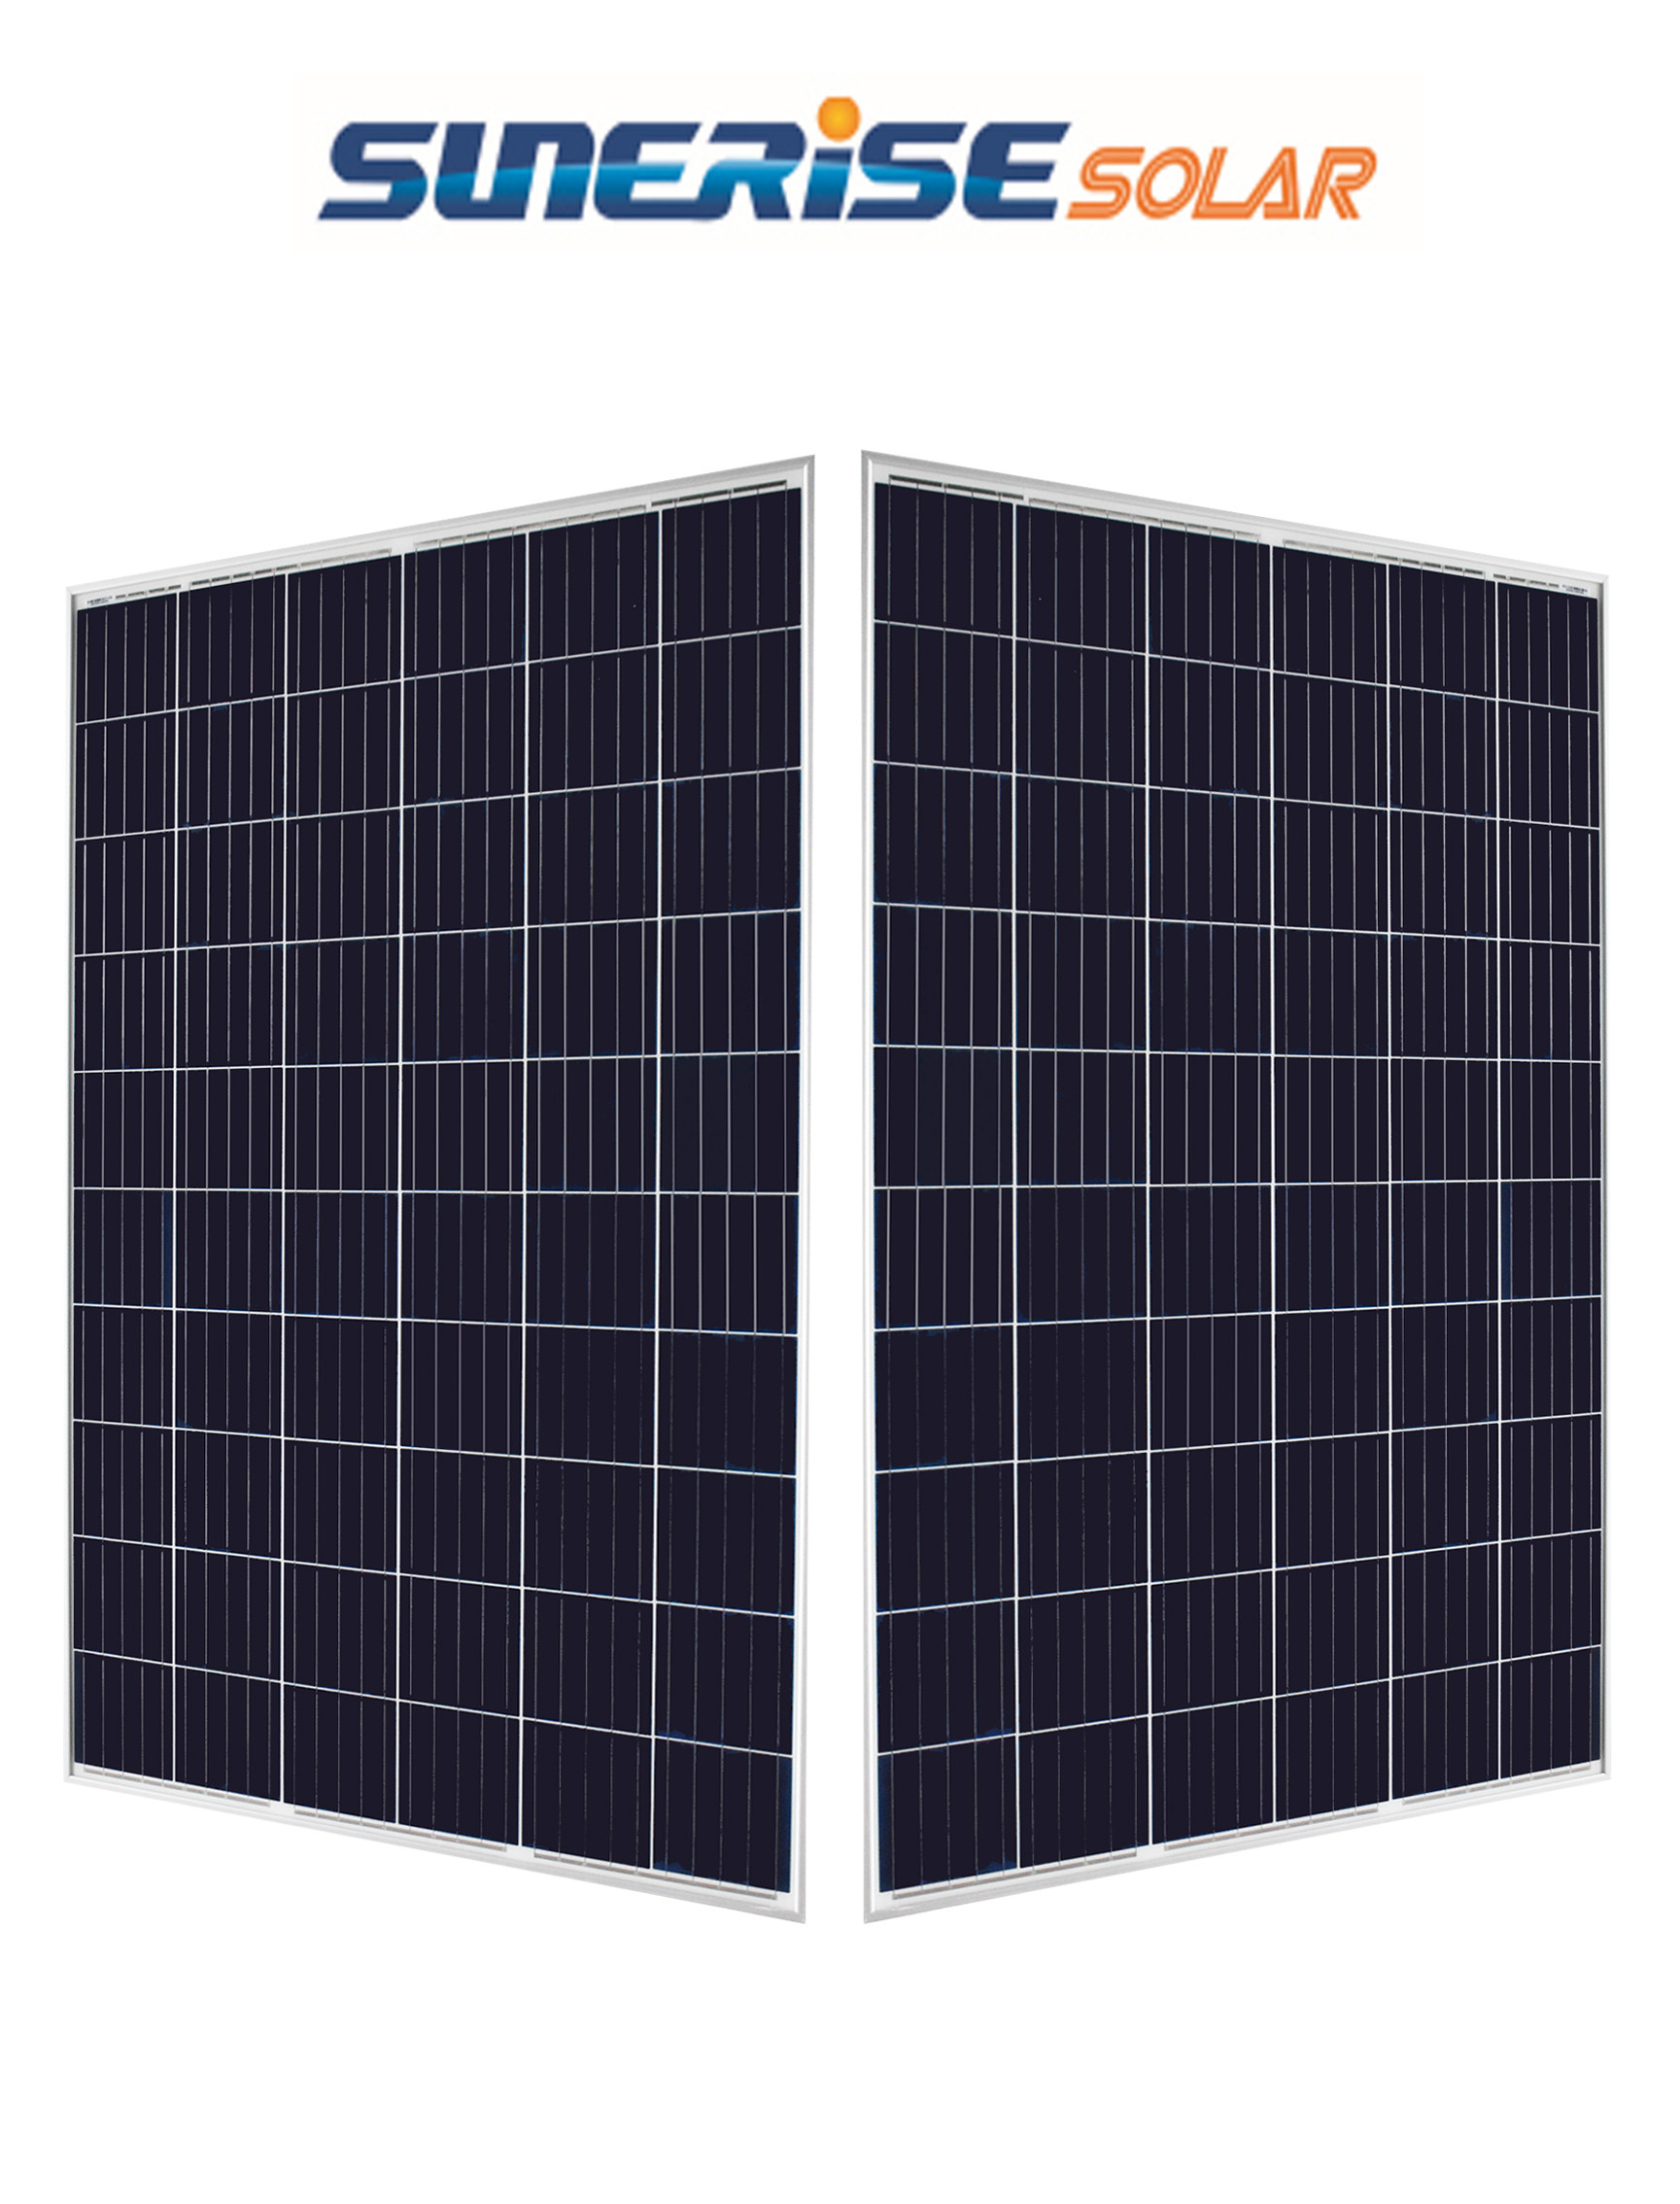 60 Cells Polycrystalline Solar Panel